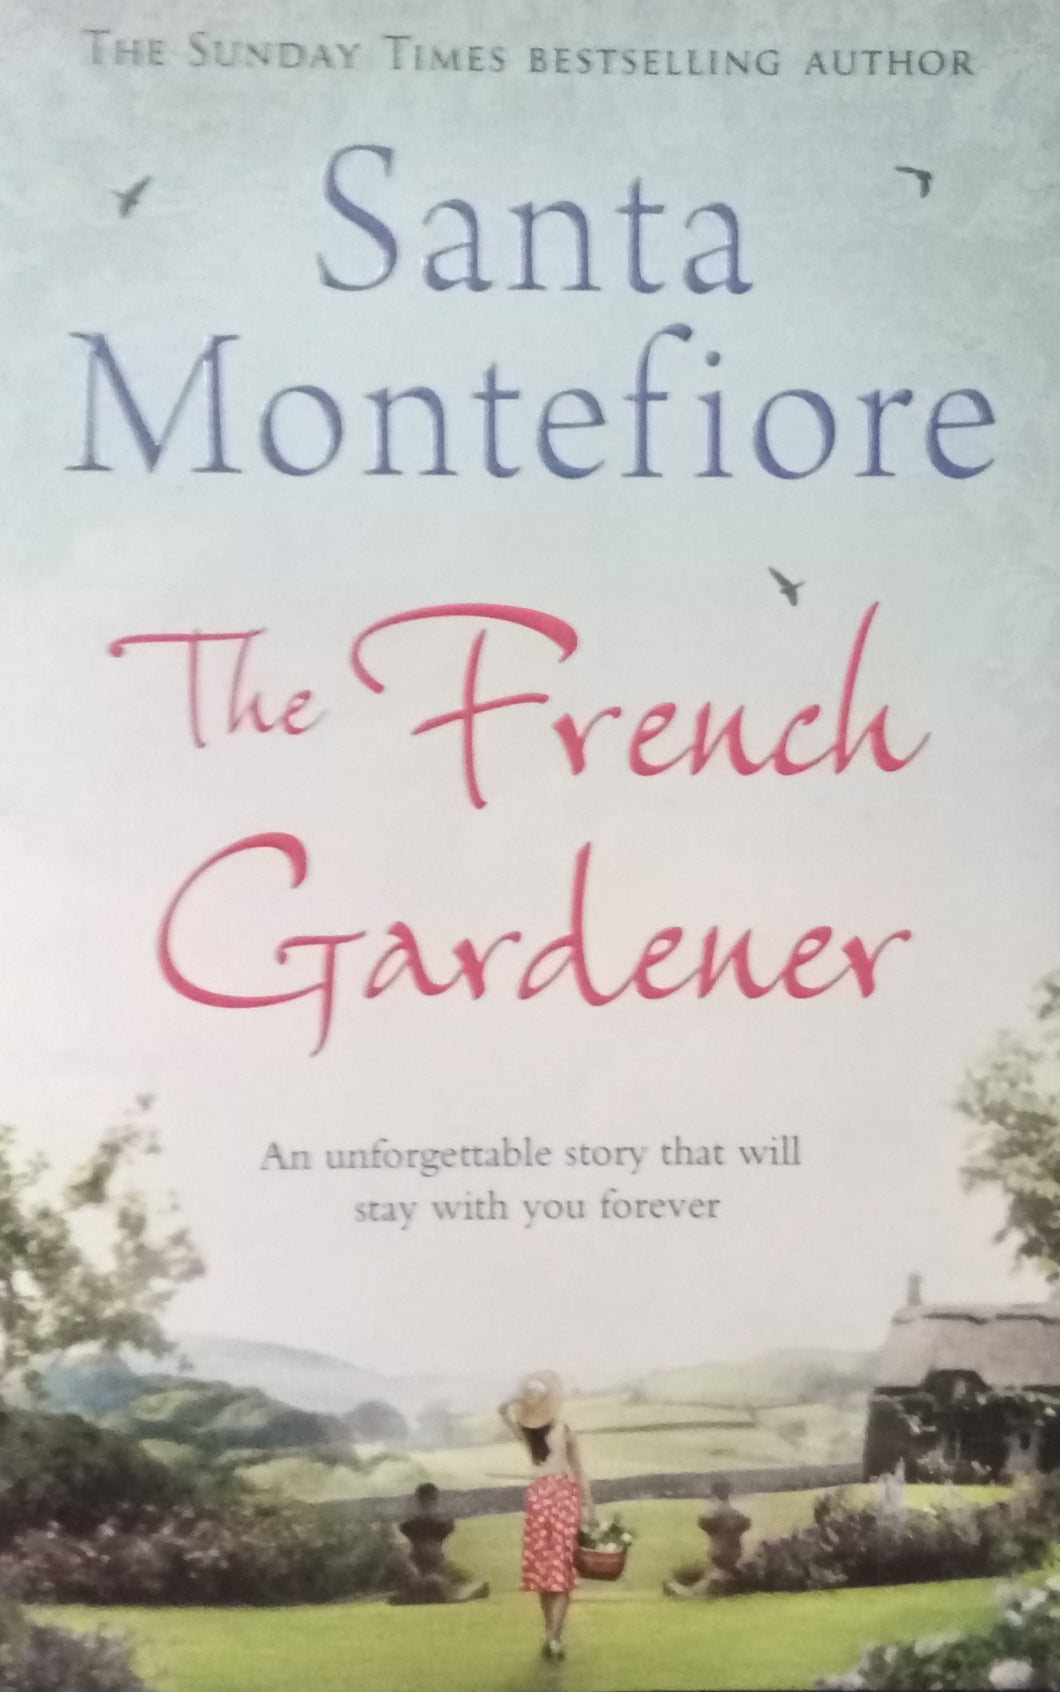 The French Gardener By Santa Montefiore